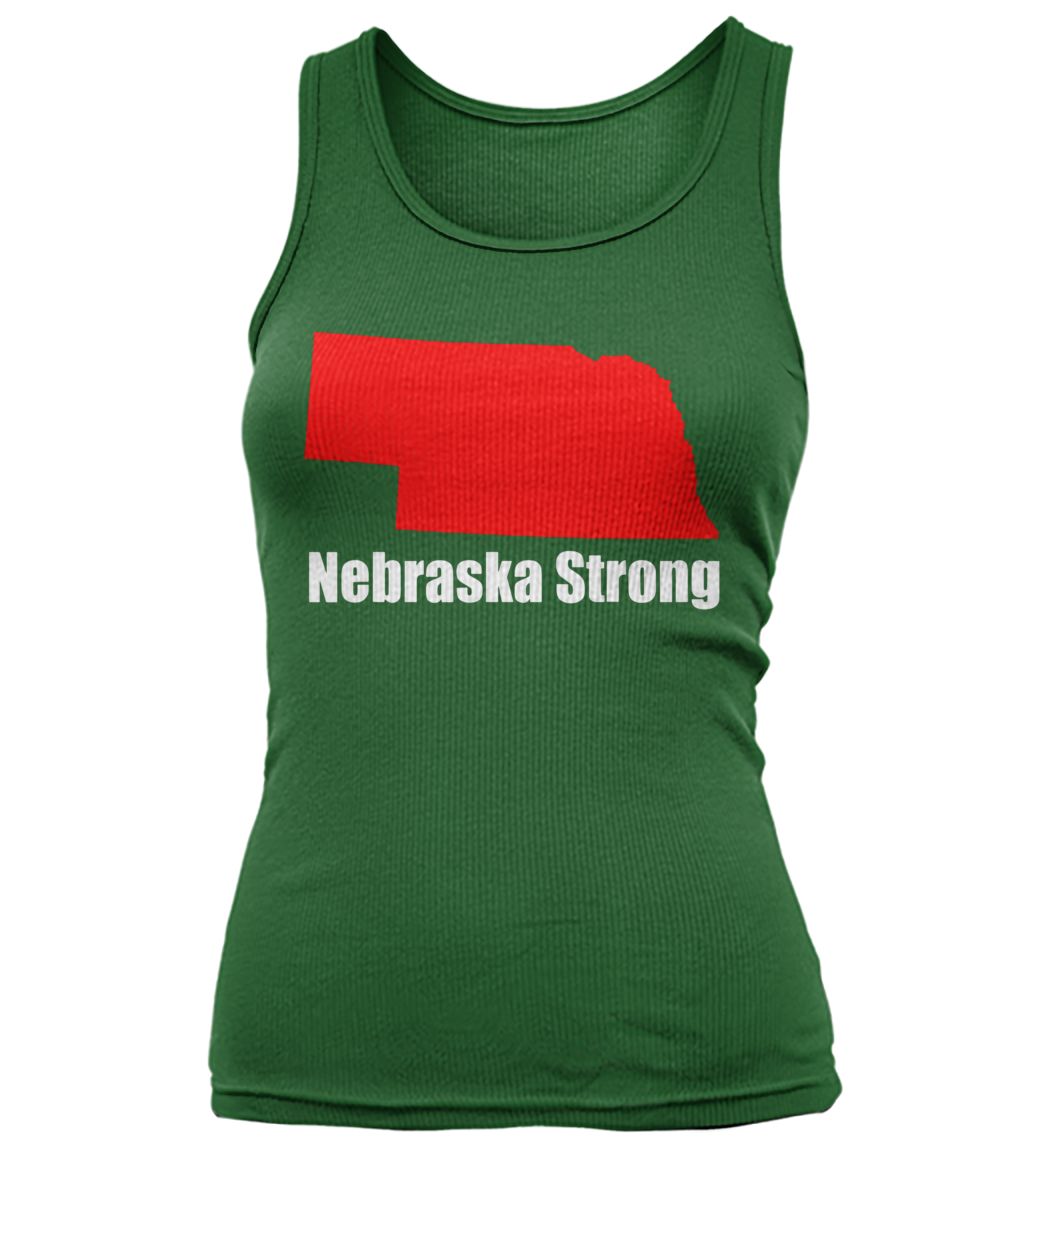 Nebraska strong women's tank top